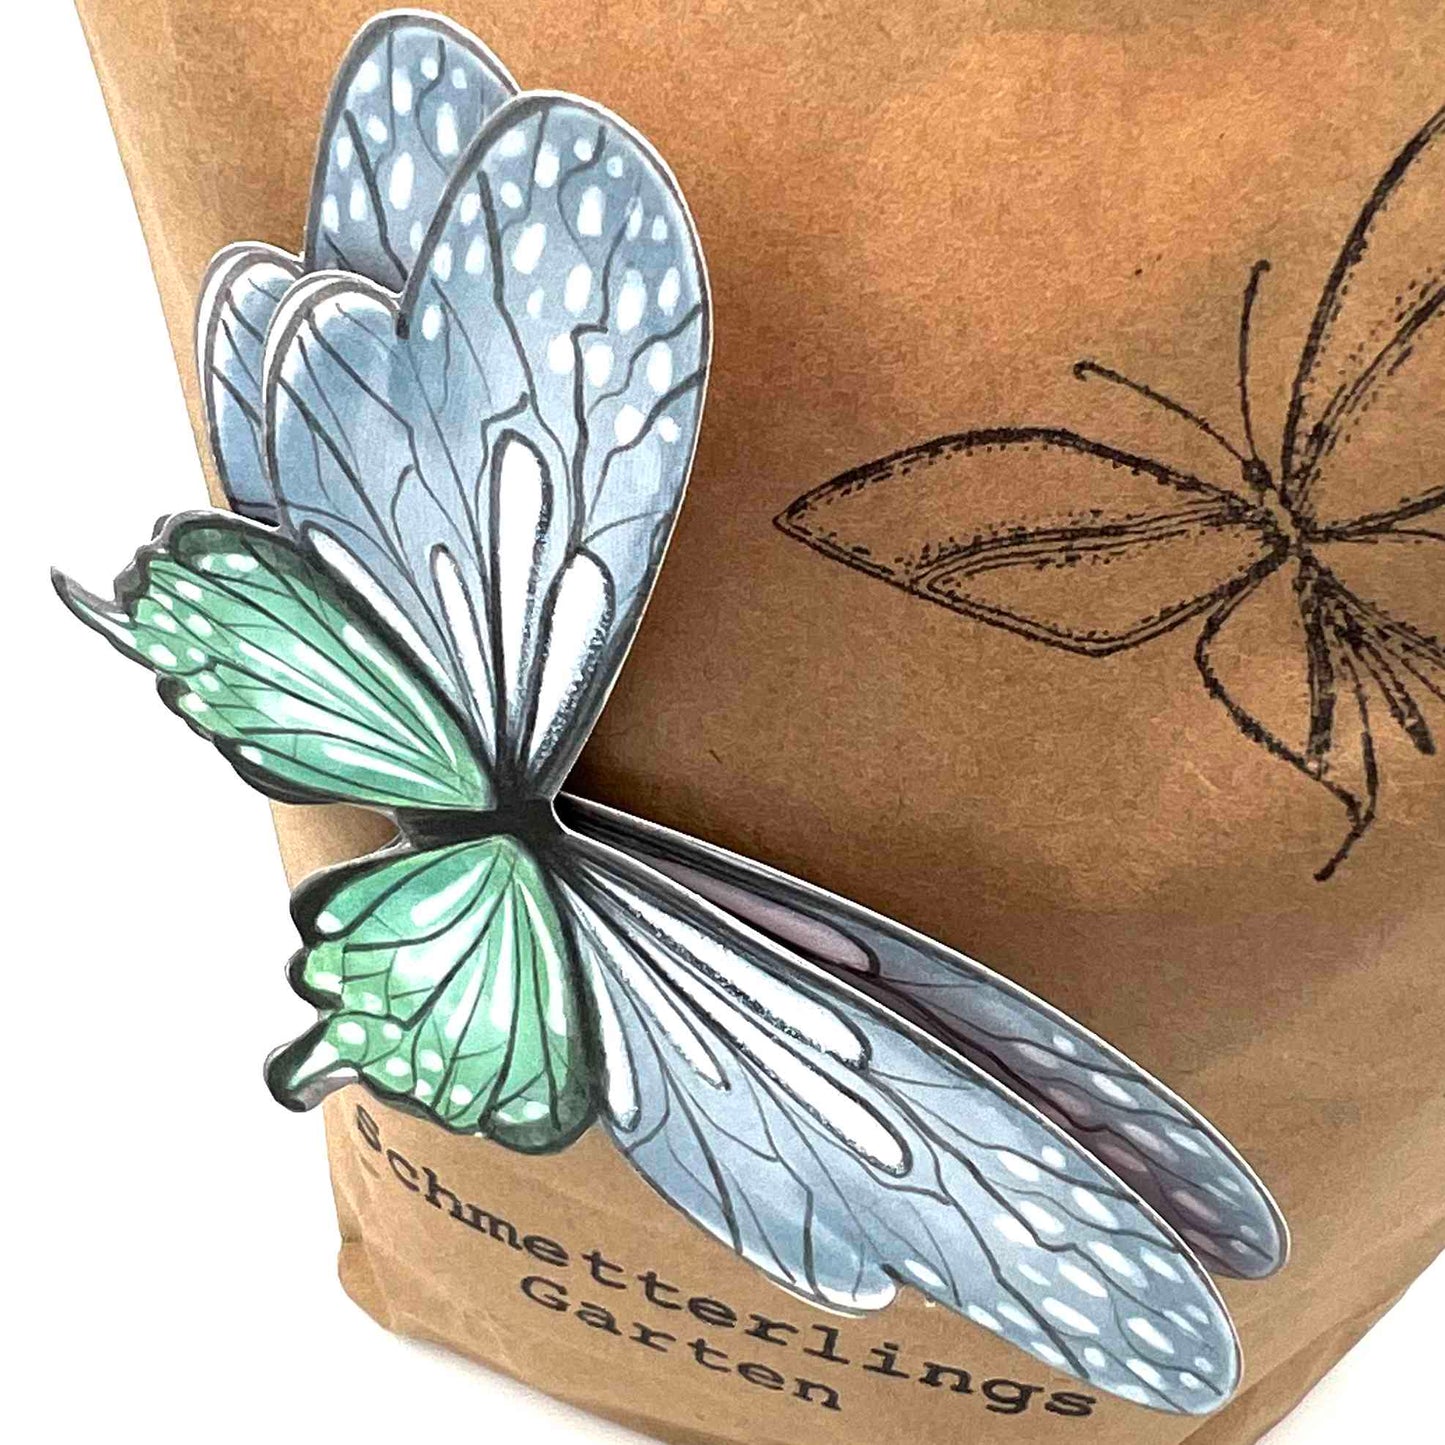 WUNDERLE handgefertigte Wundertüte "Schmetterlings Garten" mit 3D Schmetterling